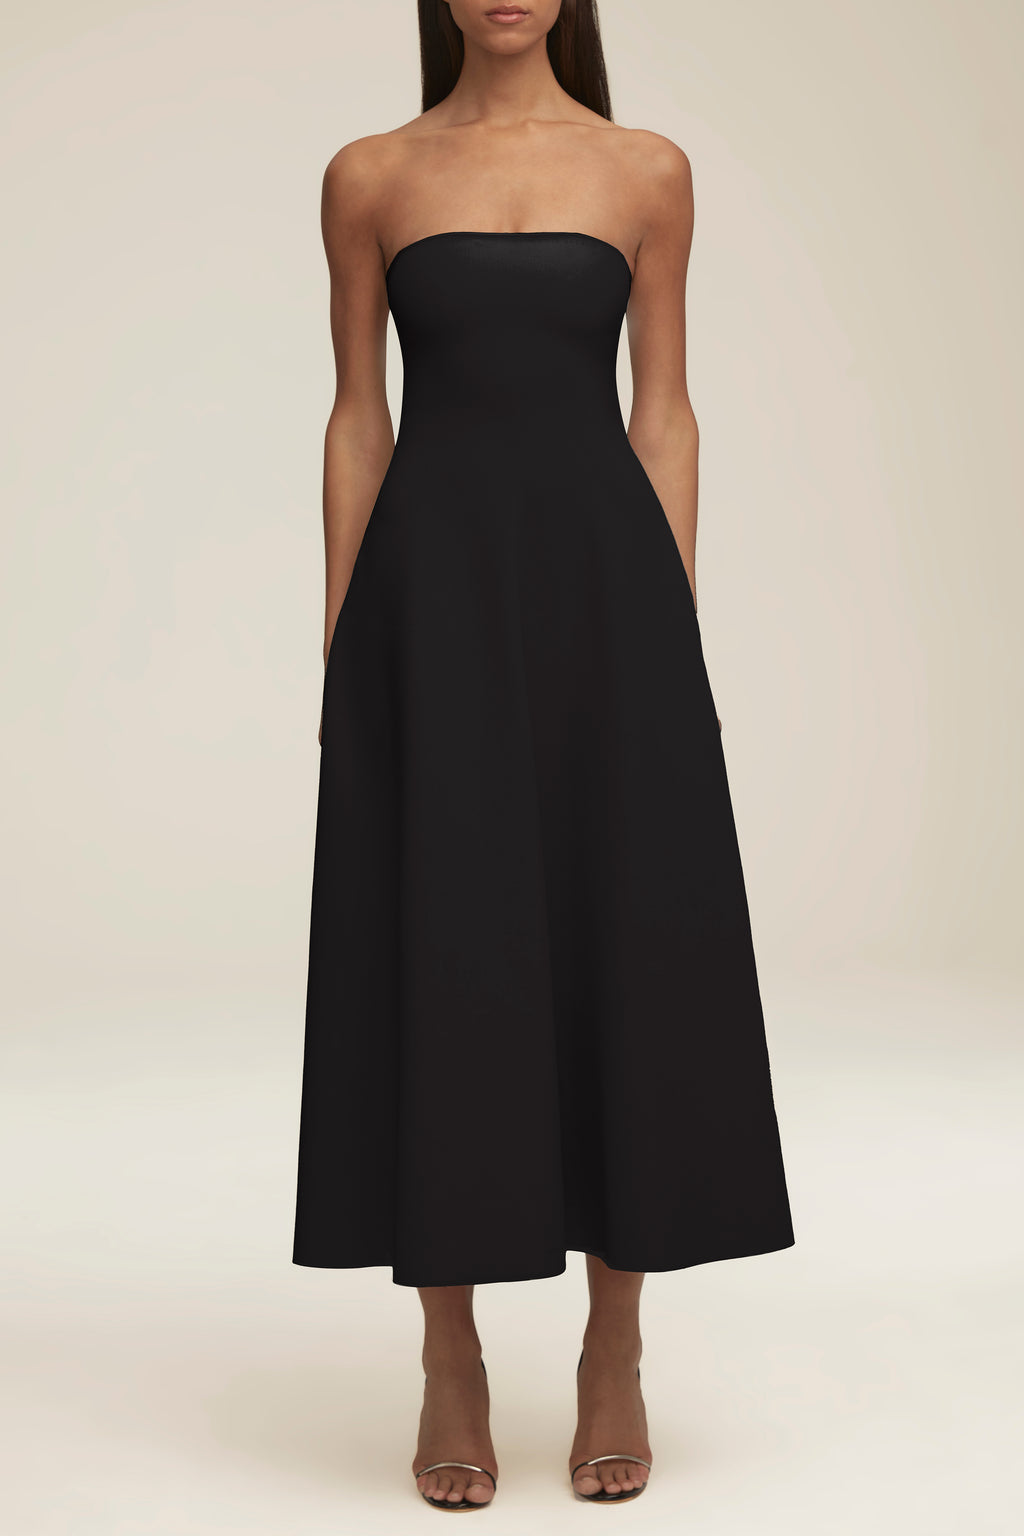 The Berry Dress in Black – BRANDON MAXWELL